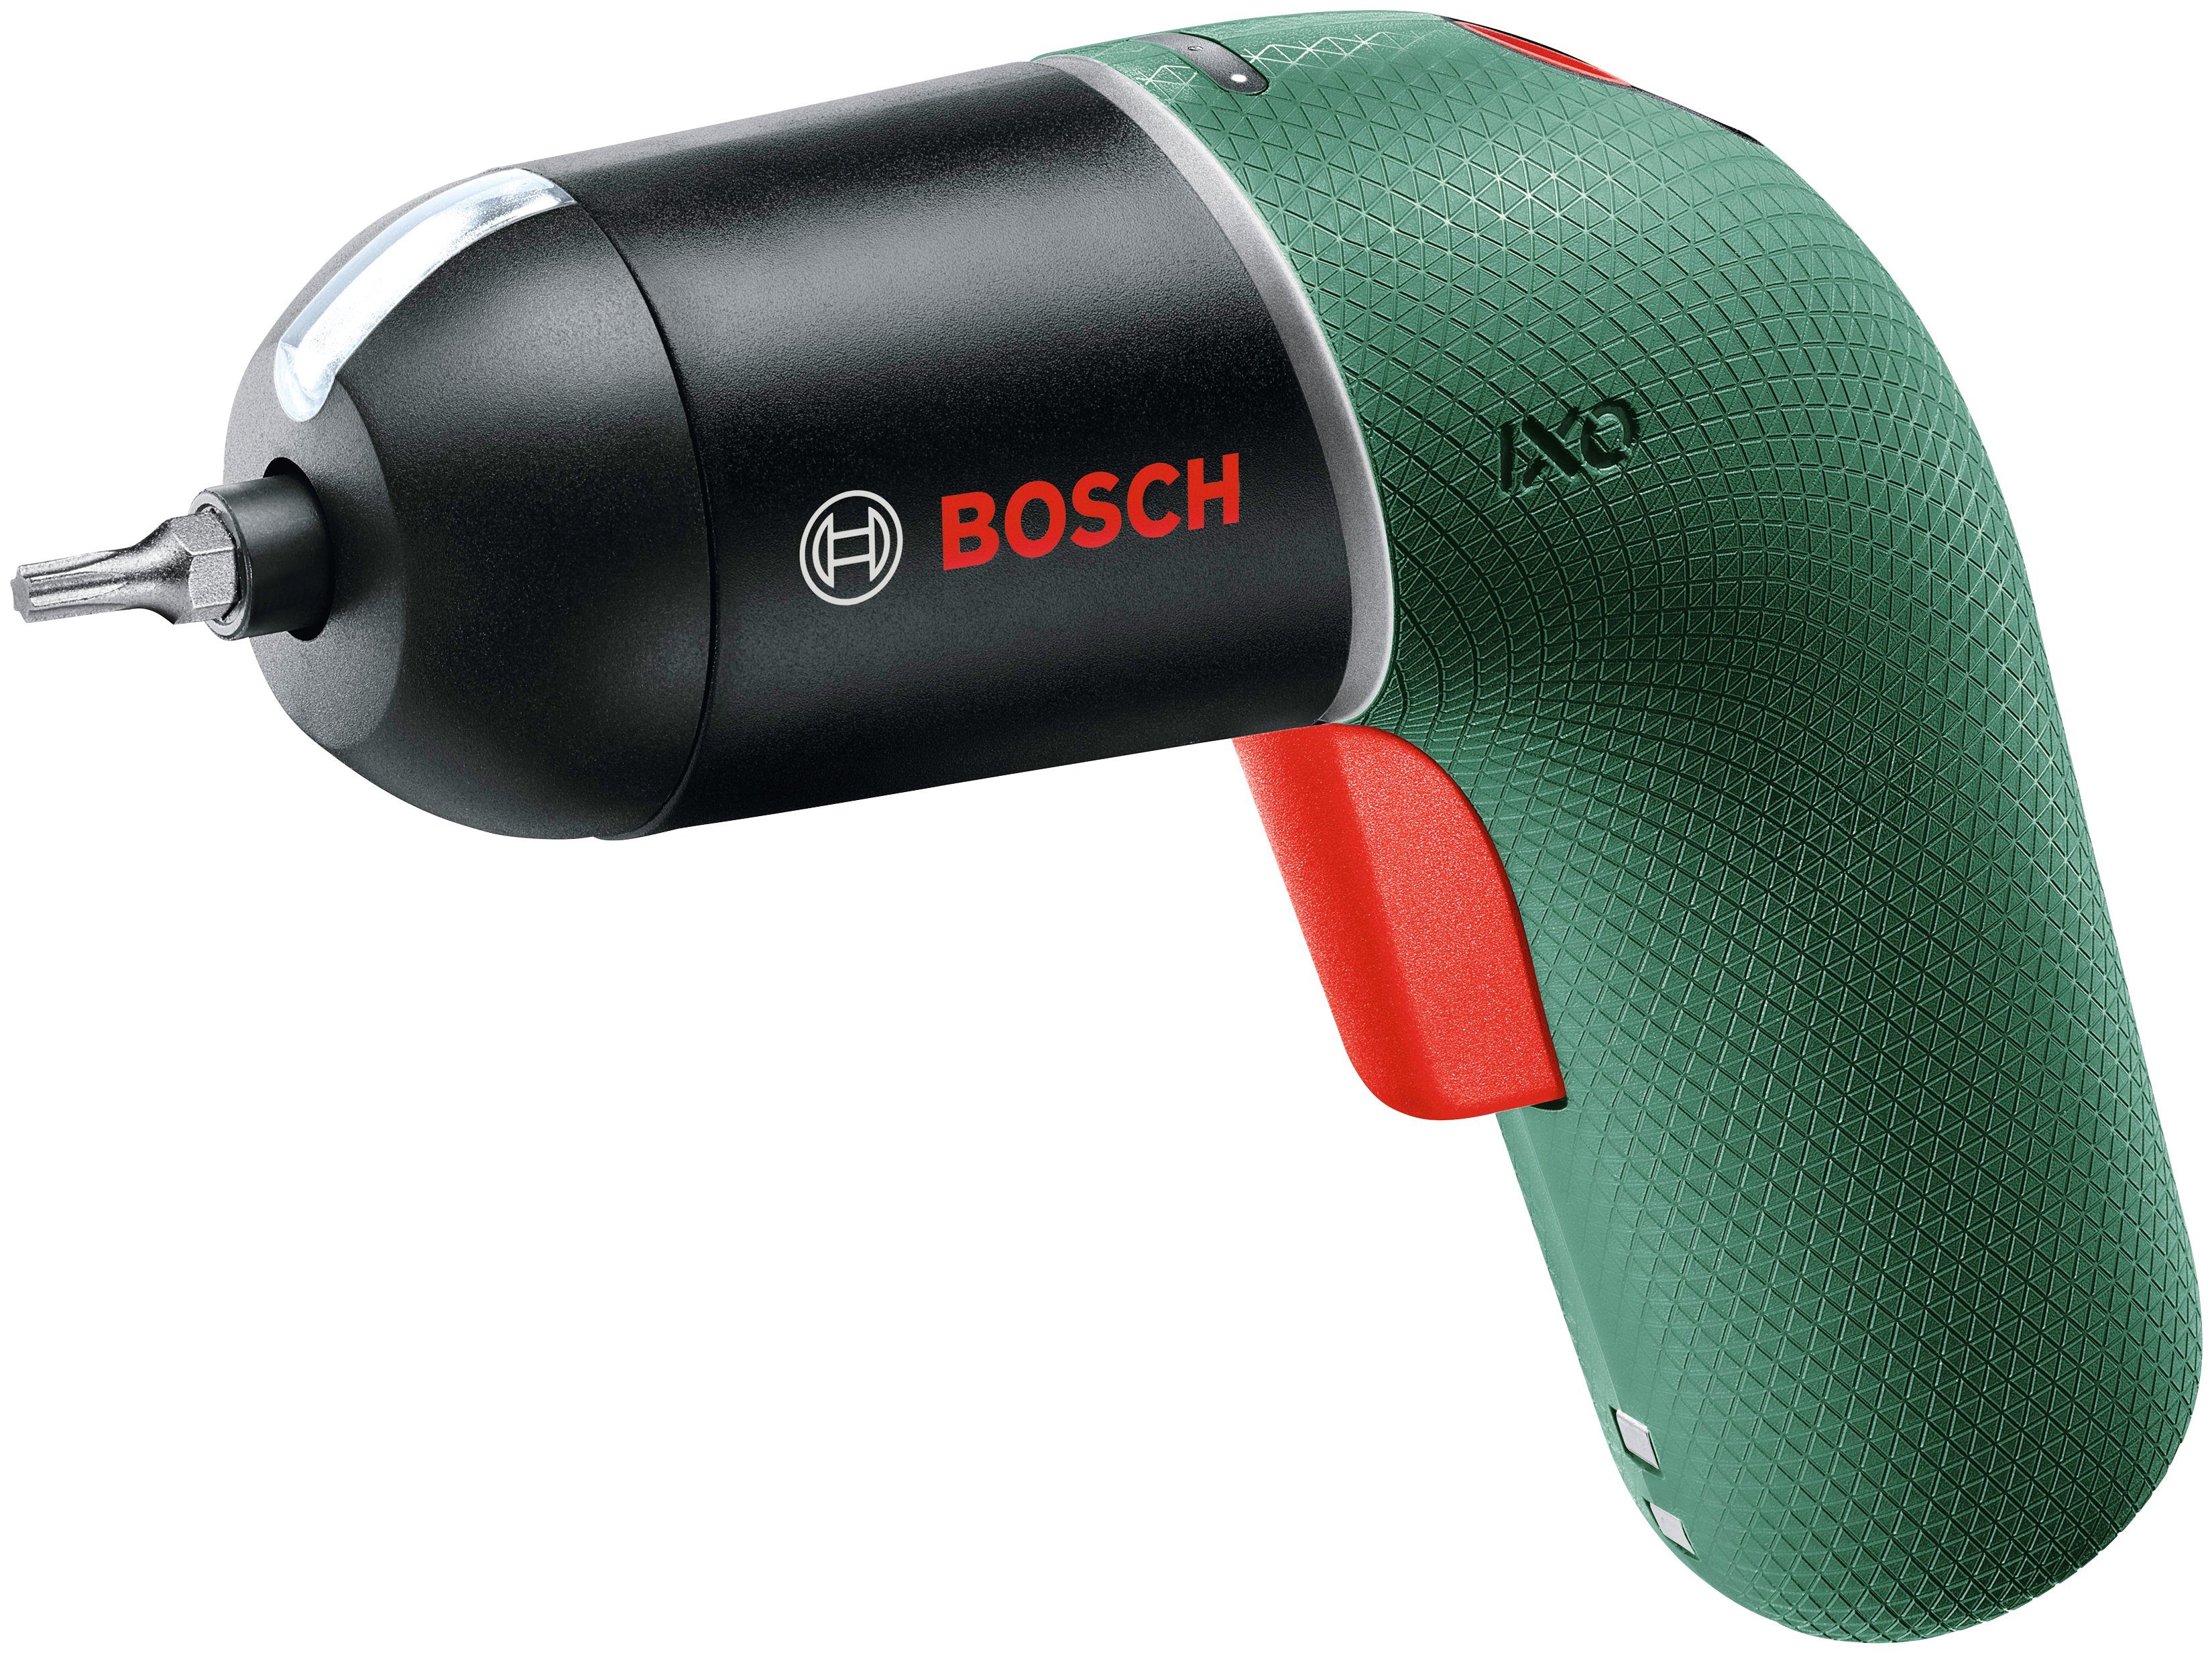 Bosch Home & Garden Akku-Schrauber USB-Ladekabel U/min, 4,5 IXO 215 Akku Nm, Classic, inklusive 6 und